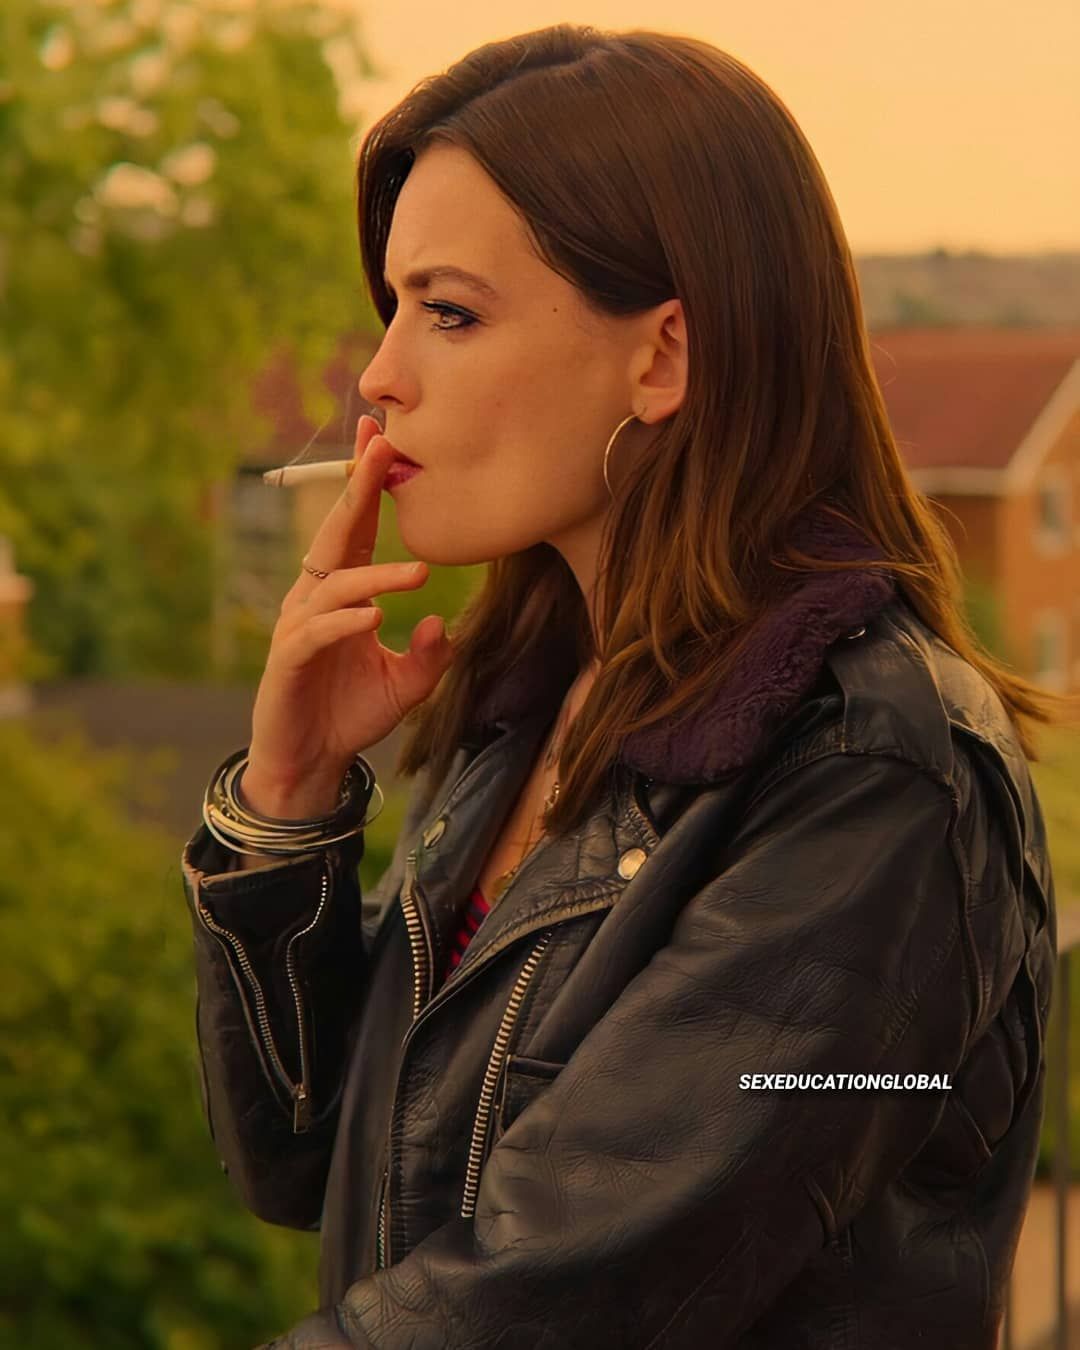 Women Smoking Girl Smoking Emma Movies And Series Shes Perfect Bad